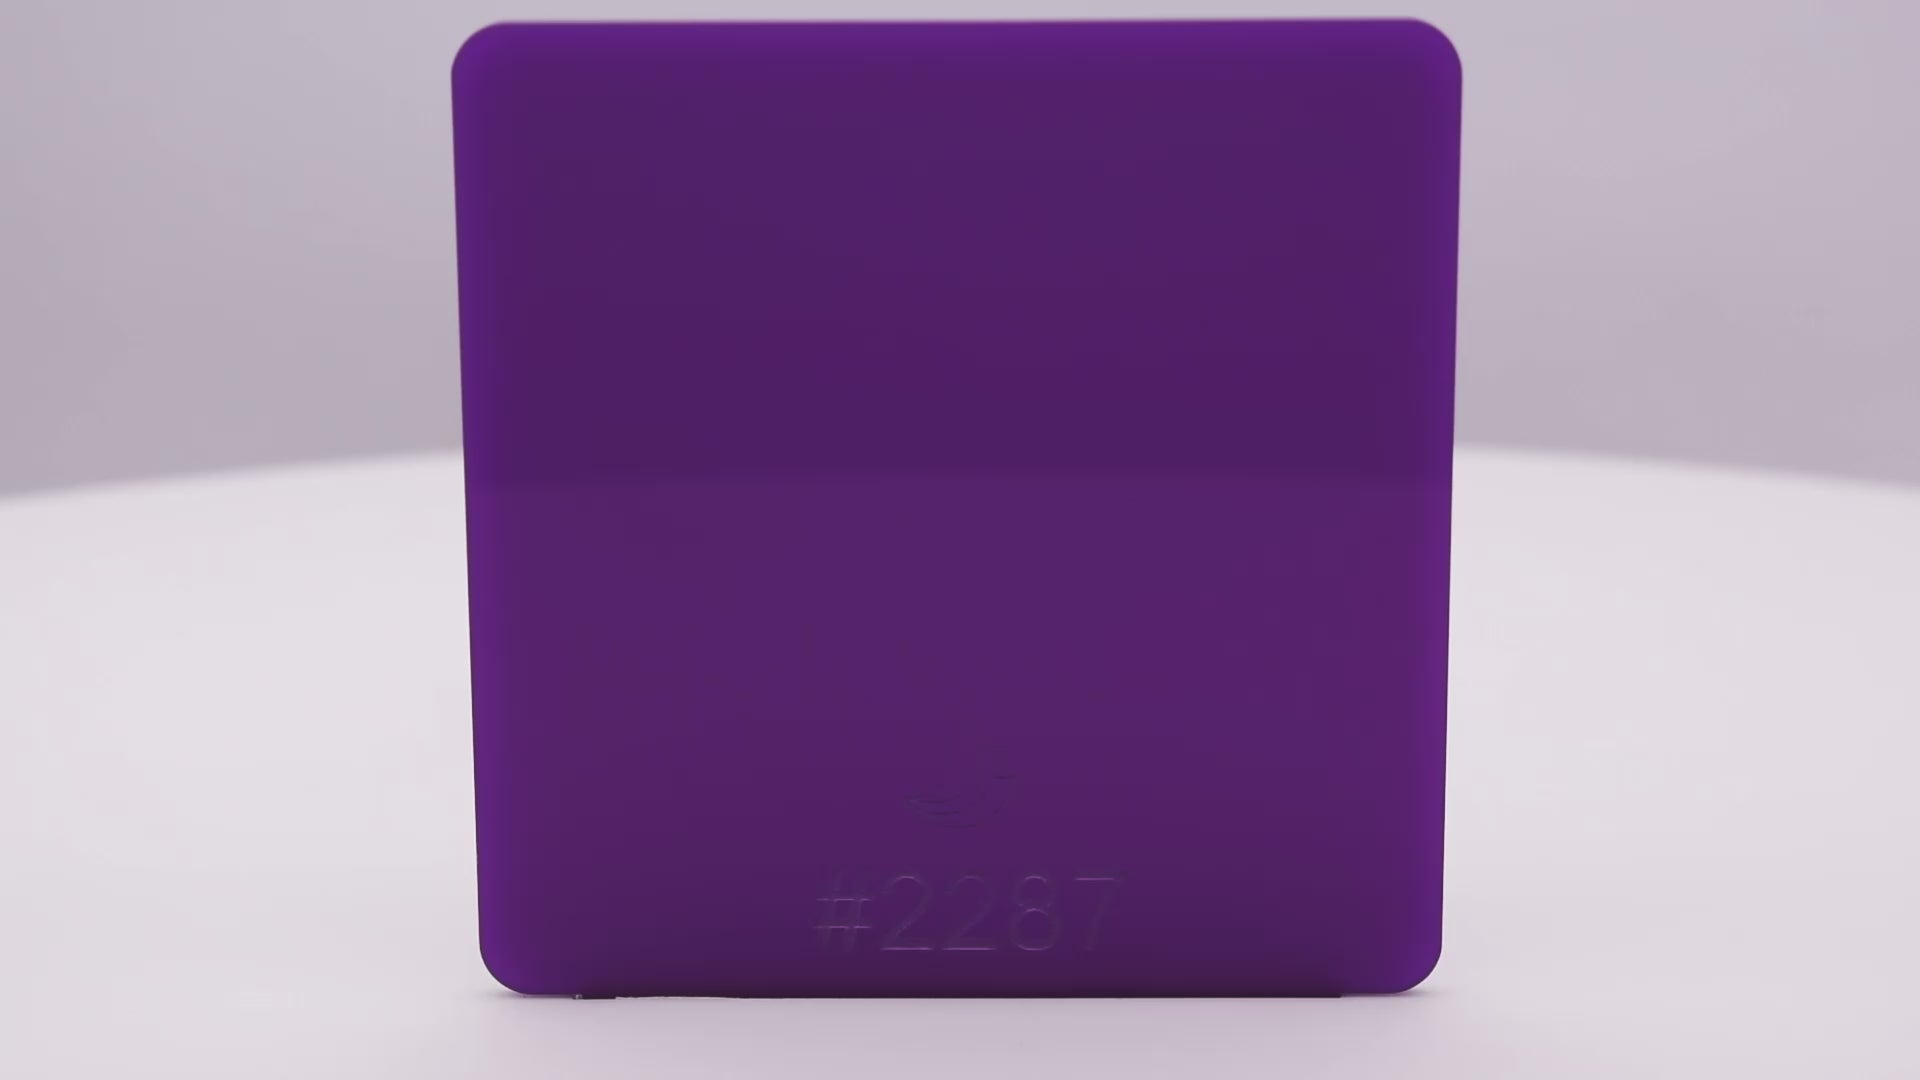 Hoja acrílica translúcida violeta #2287 de 1/8"